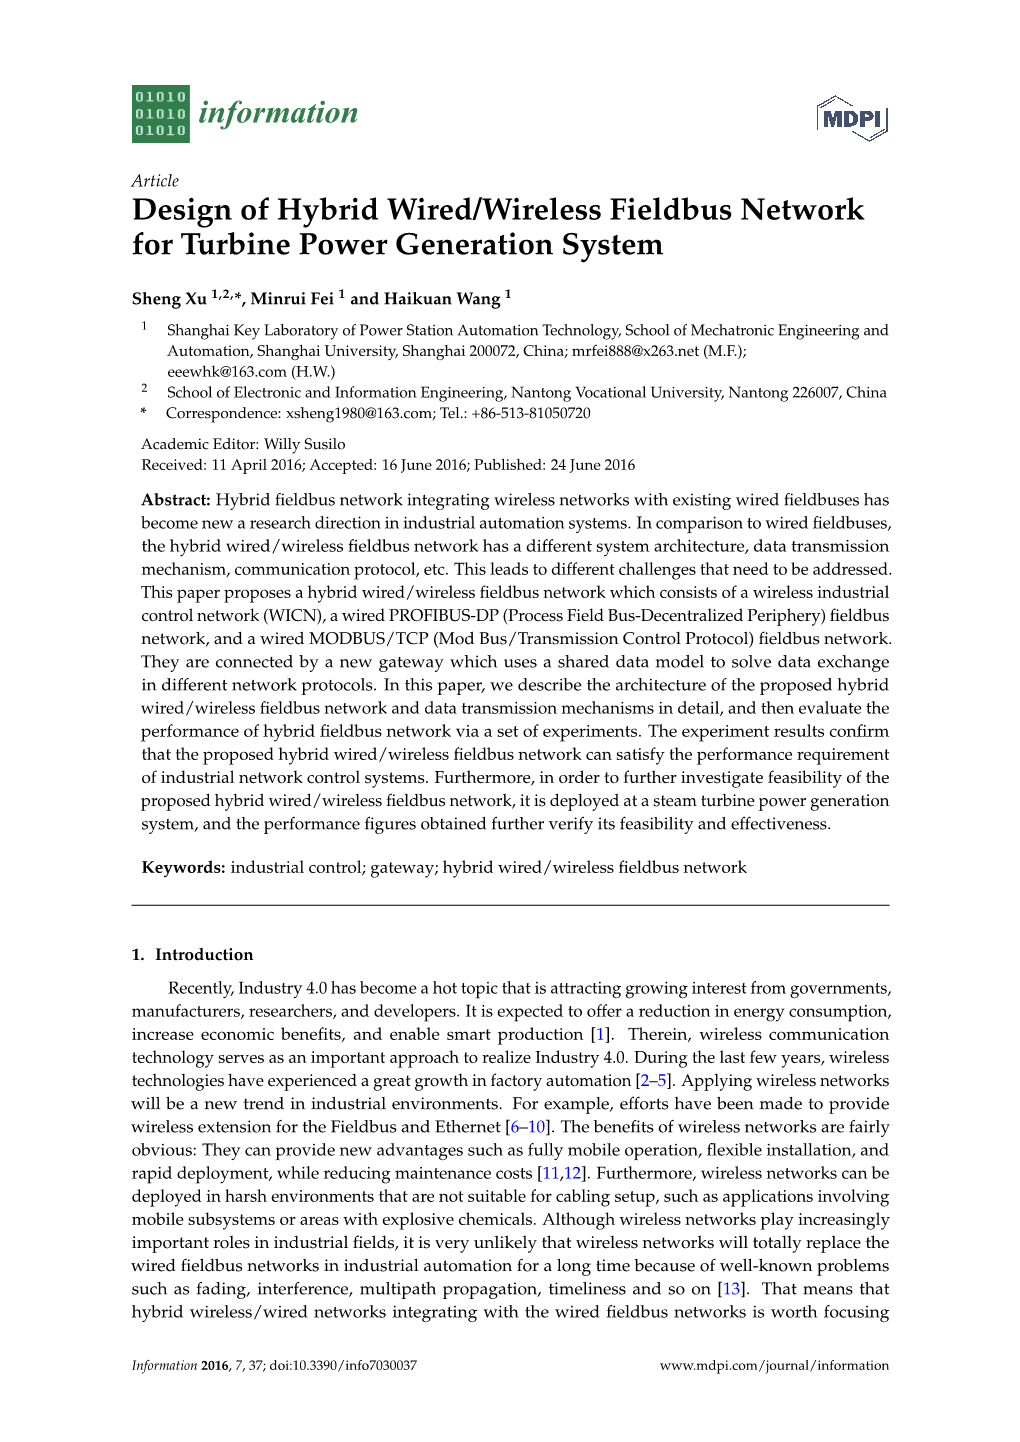 Design of Hybrid Wired/Wireless Fieldbus Network for Turbine Power Generation System